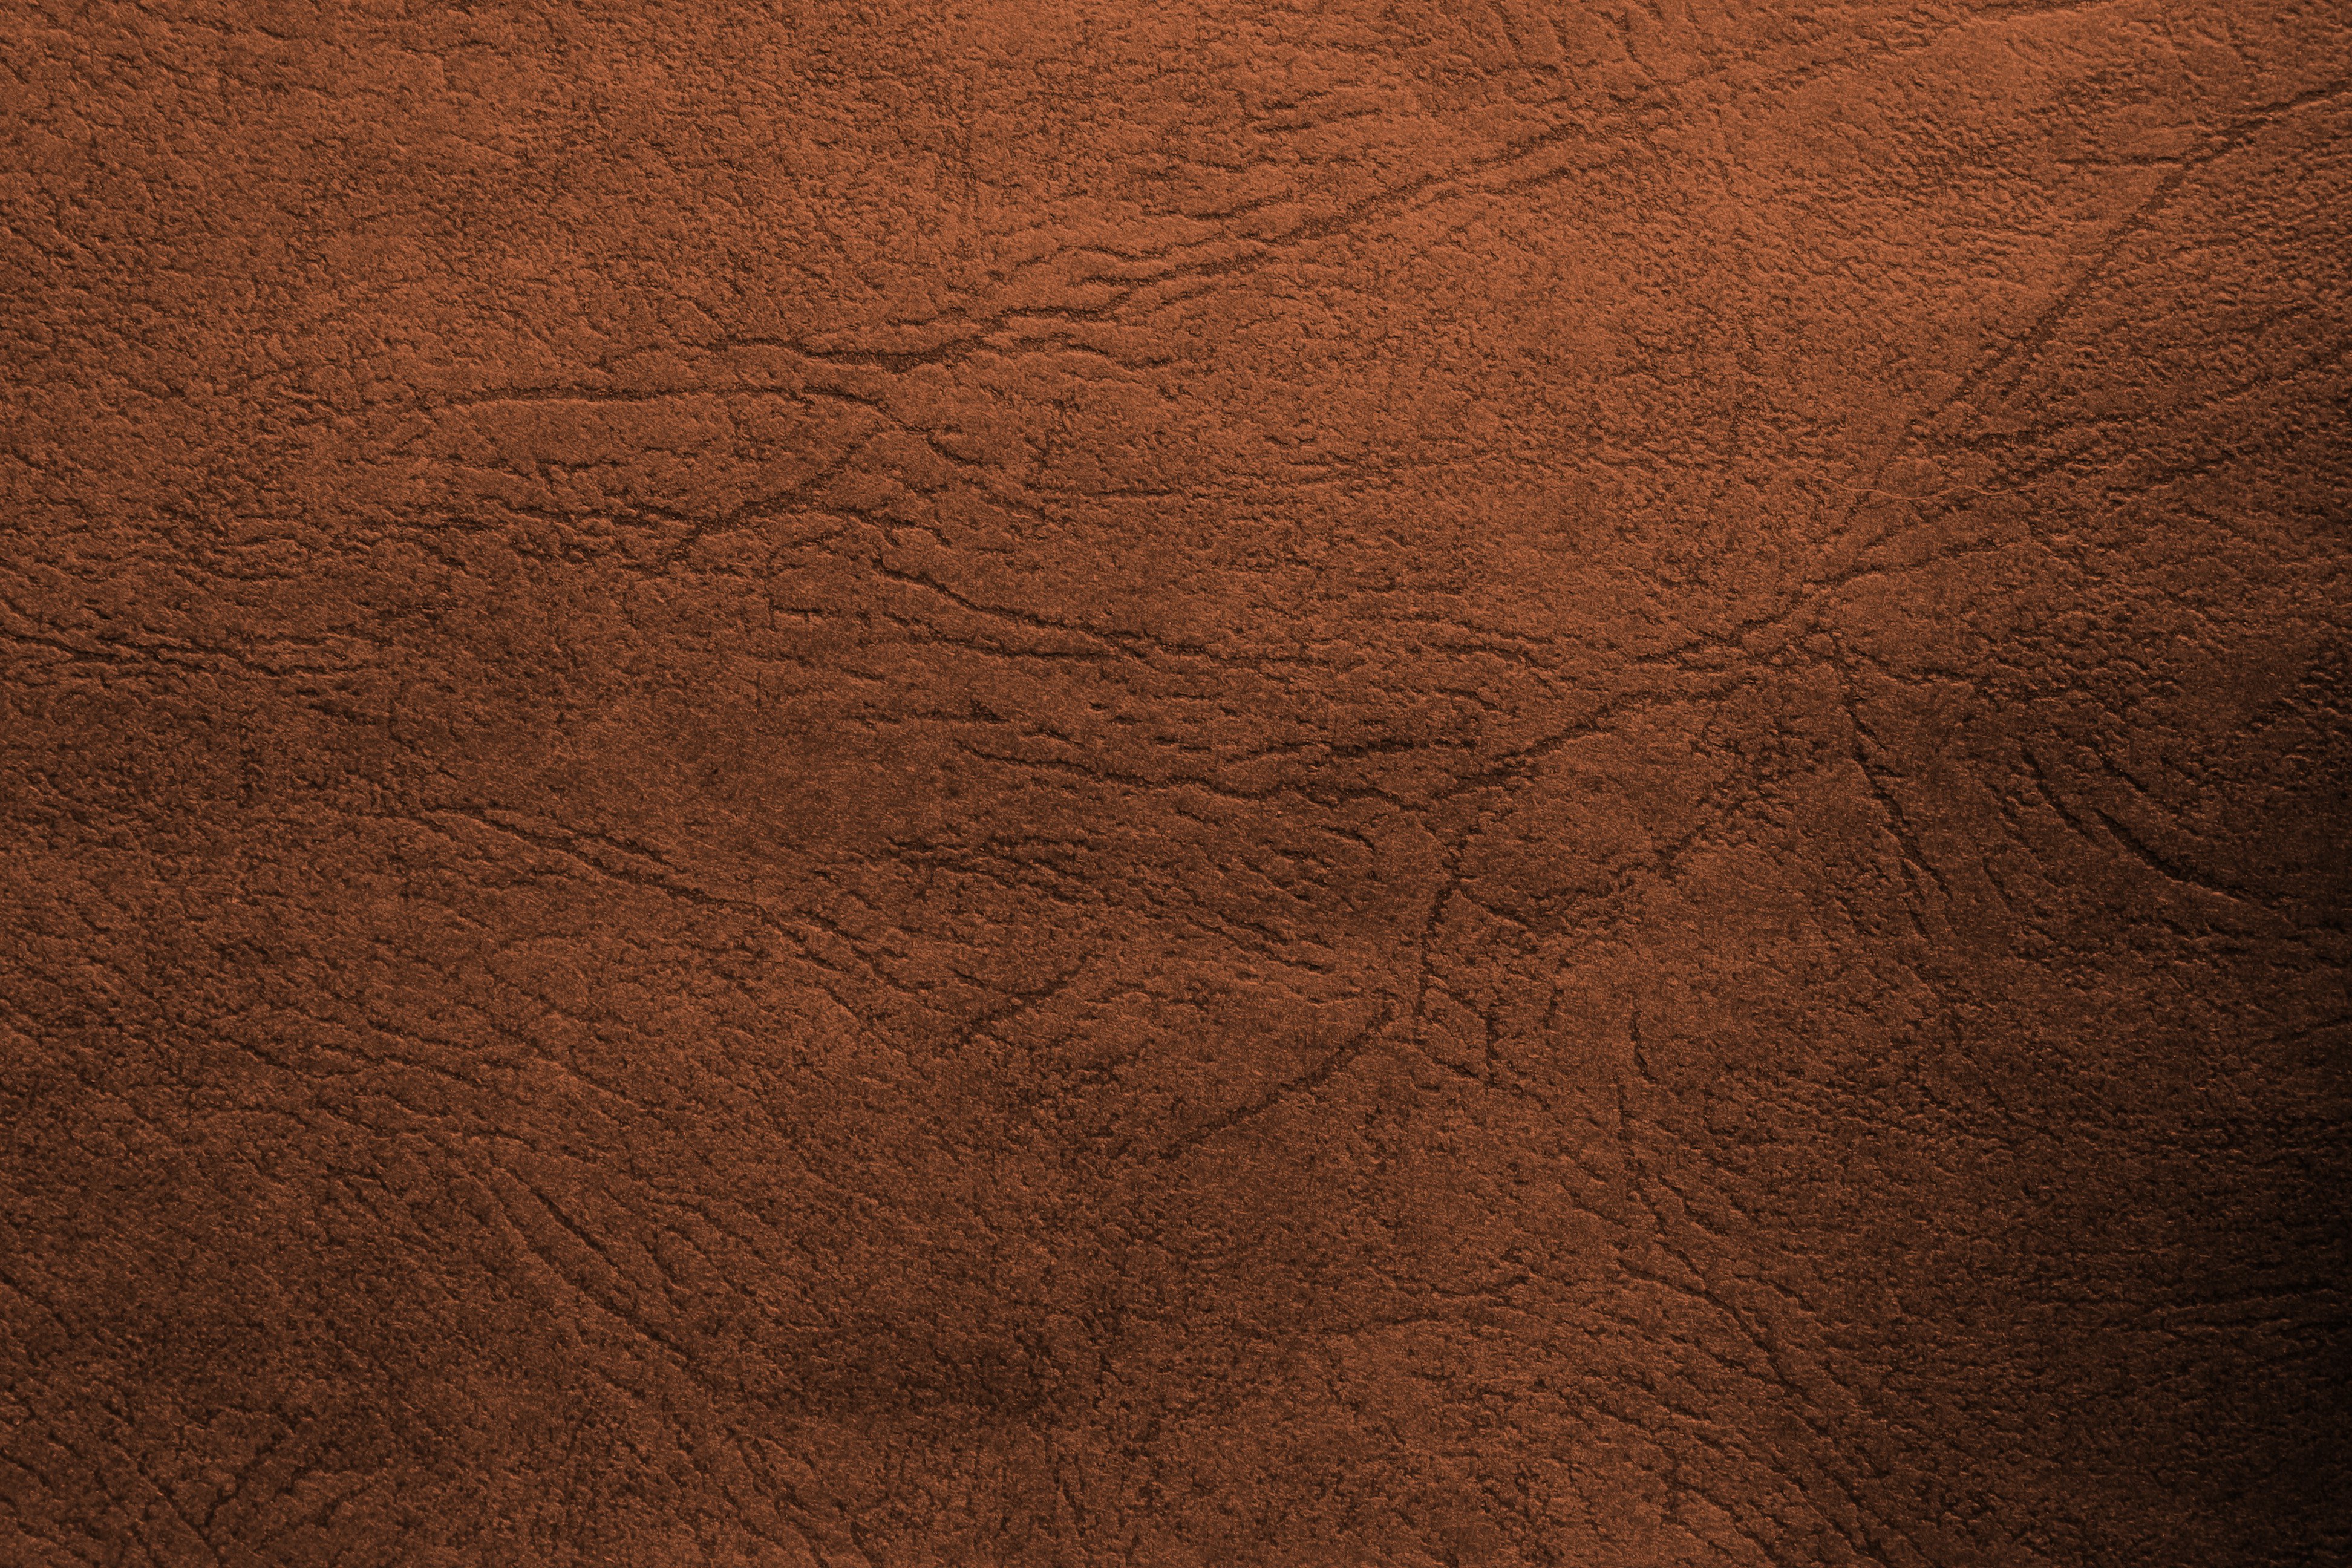 Brown Leather Texture Picture | Free Photograph | Photos Public Domain